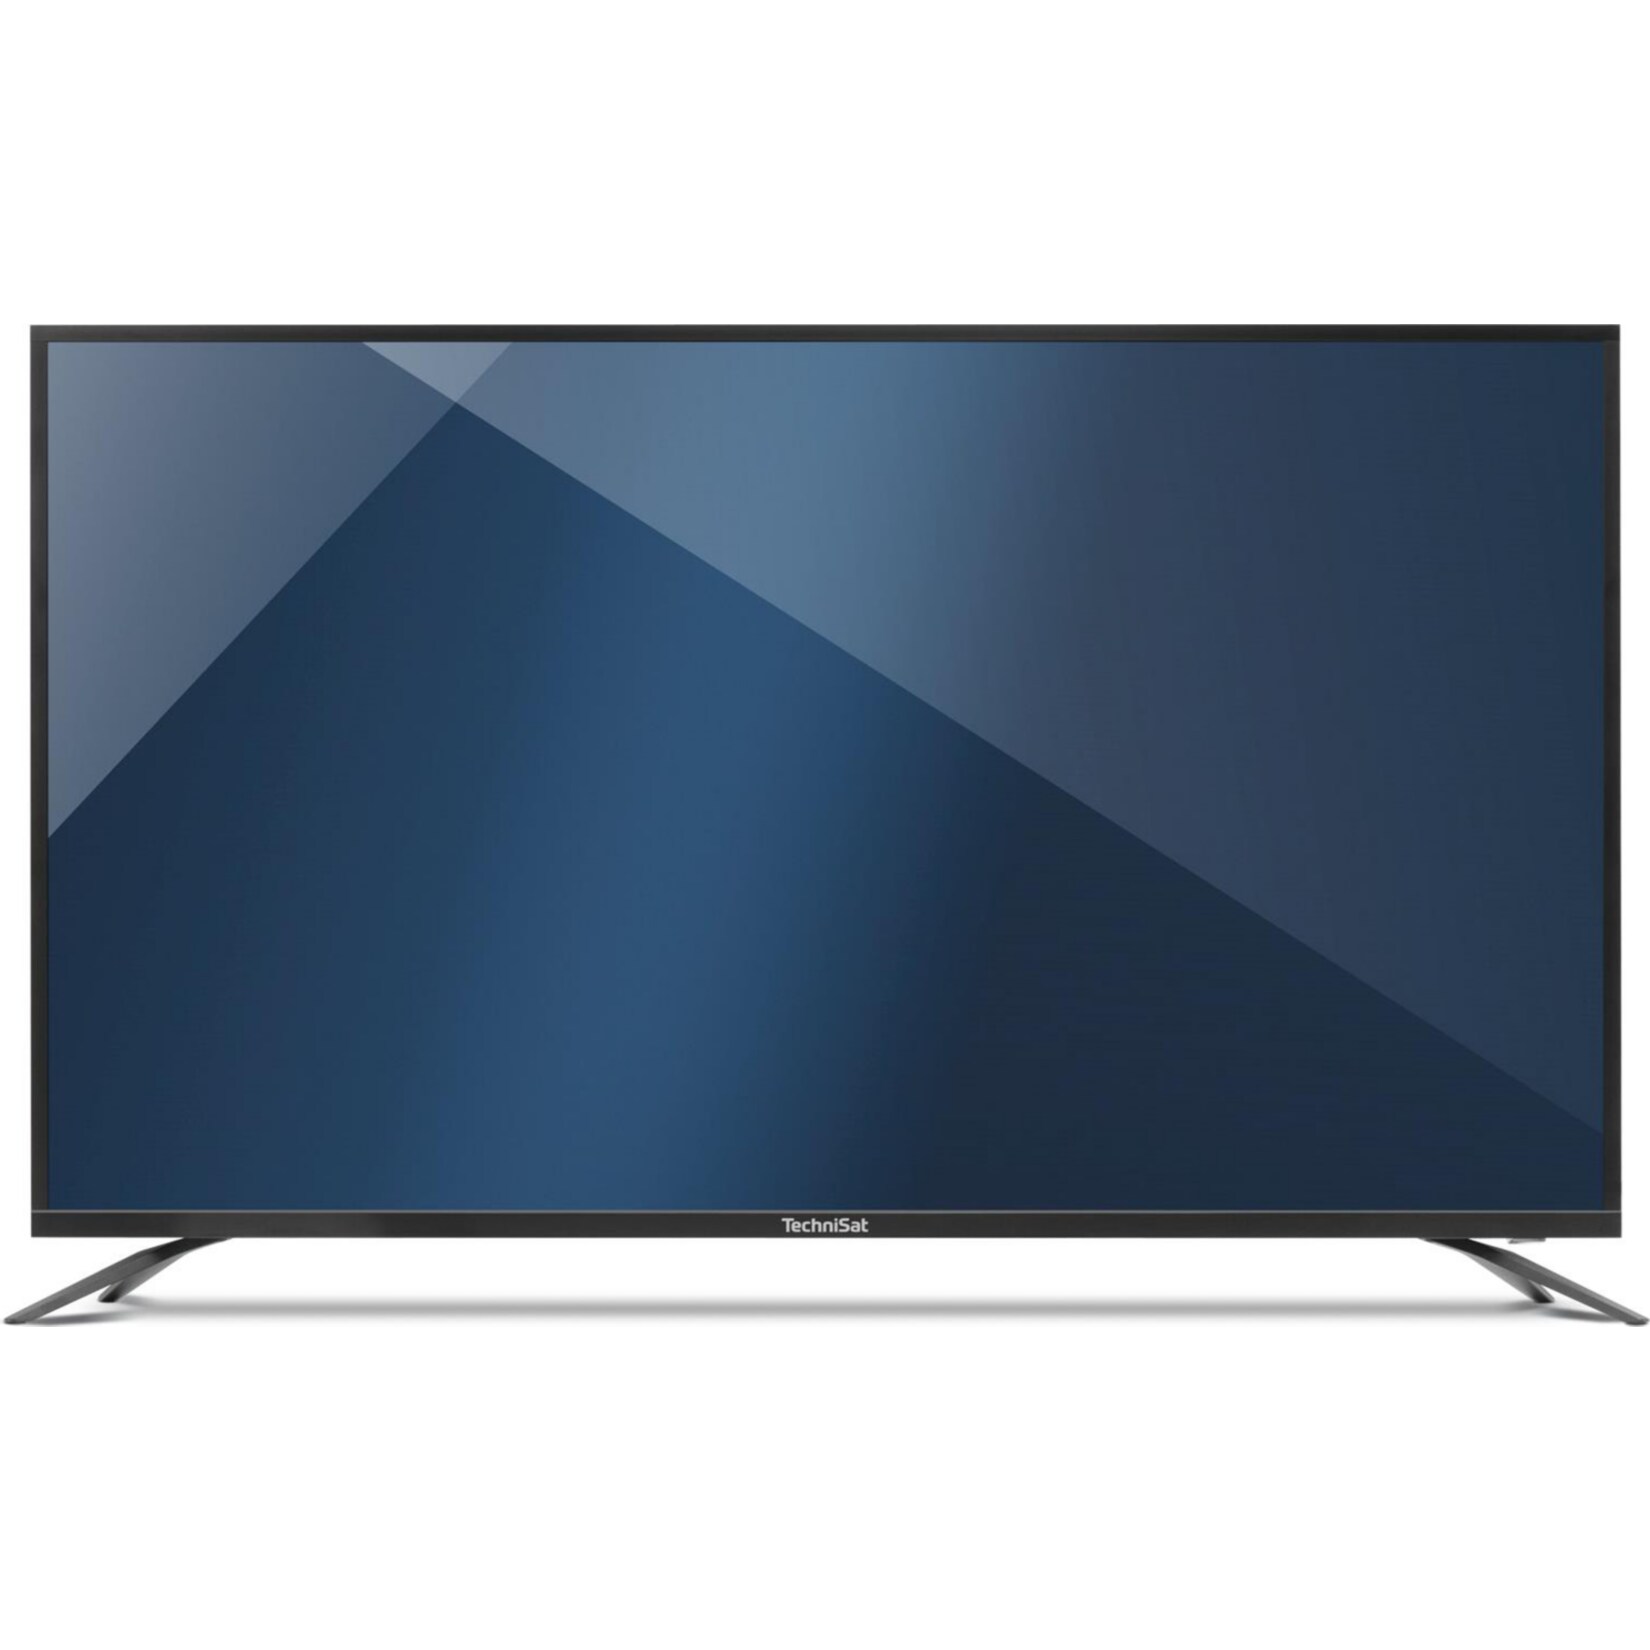 TechniSat Monitorline UHD 49 124 cm (49" Zoll) UHD 4K Fernseher/Monitor (HDR10, Eco, 3x HDMI)